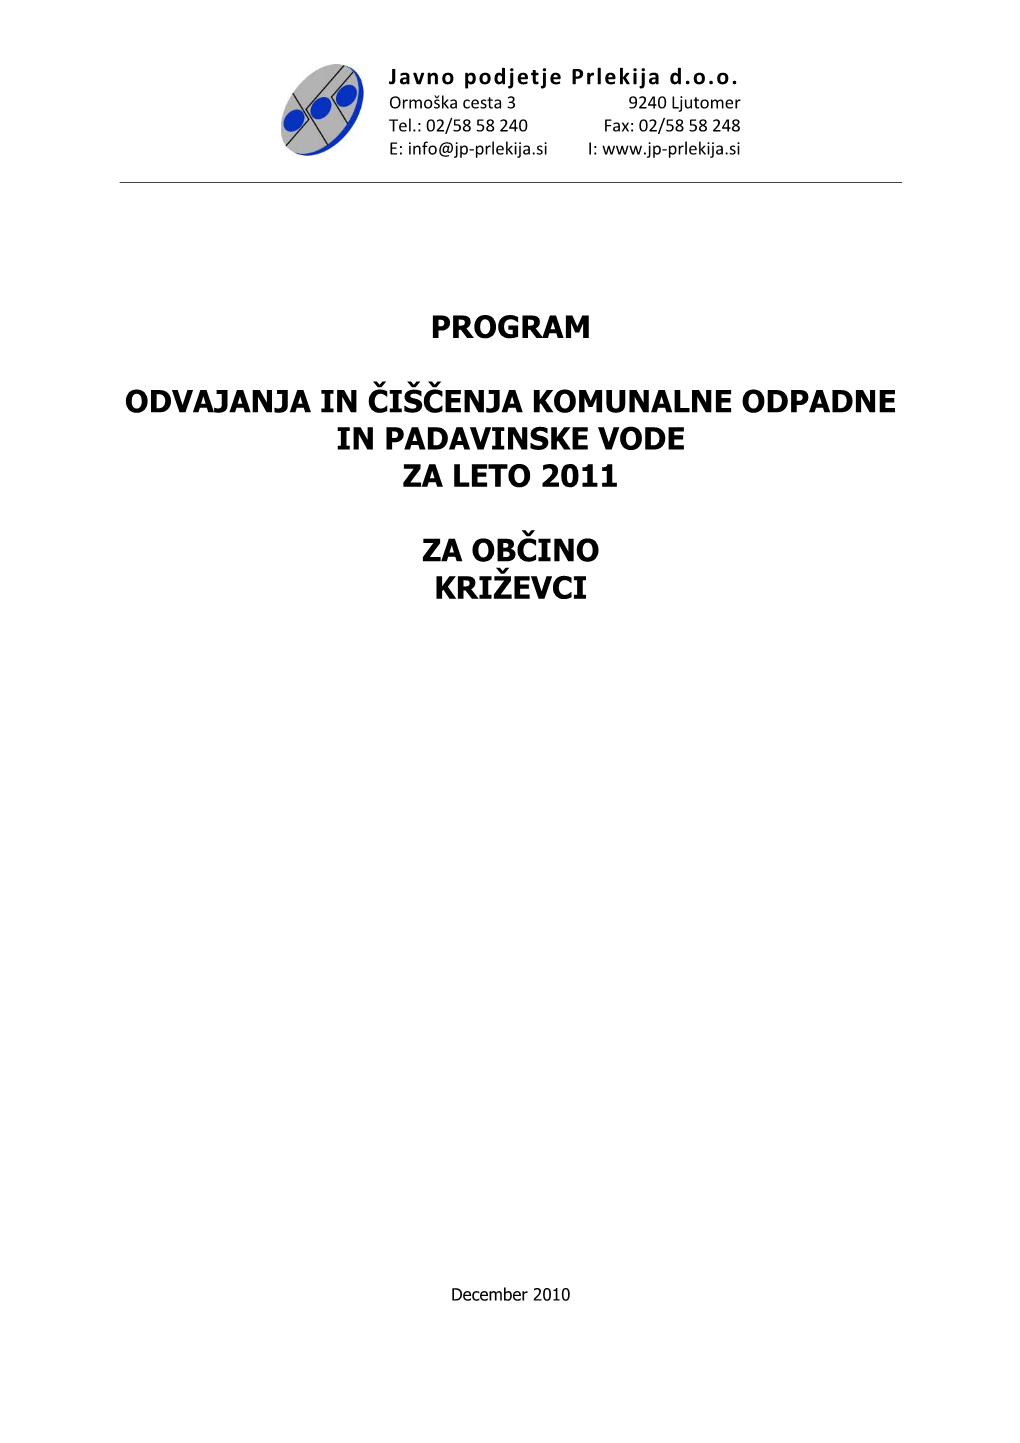 Program OČV 2011 Križevci 04012011